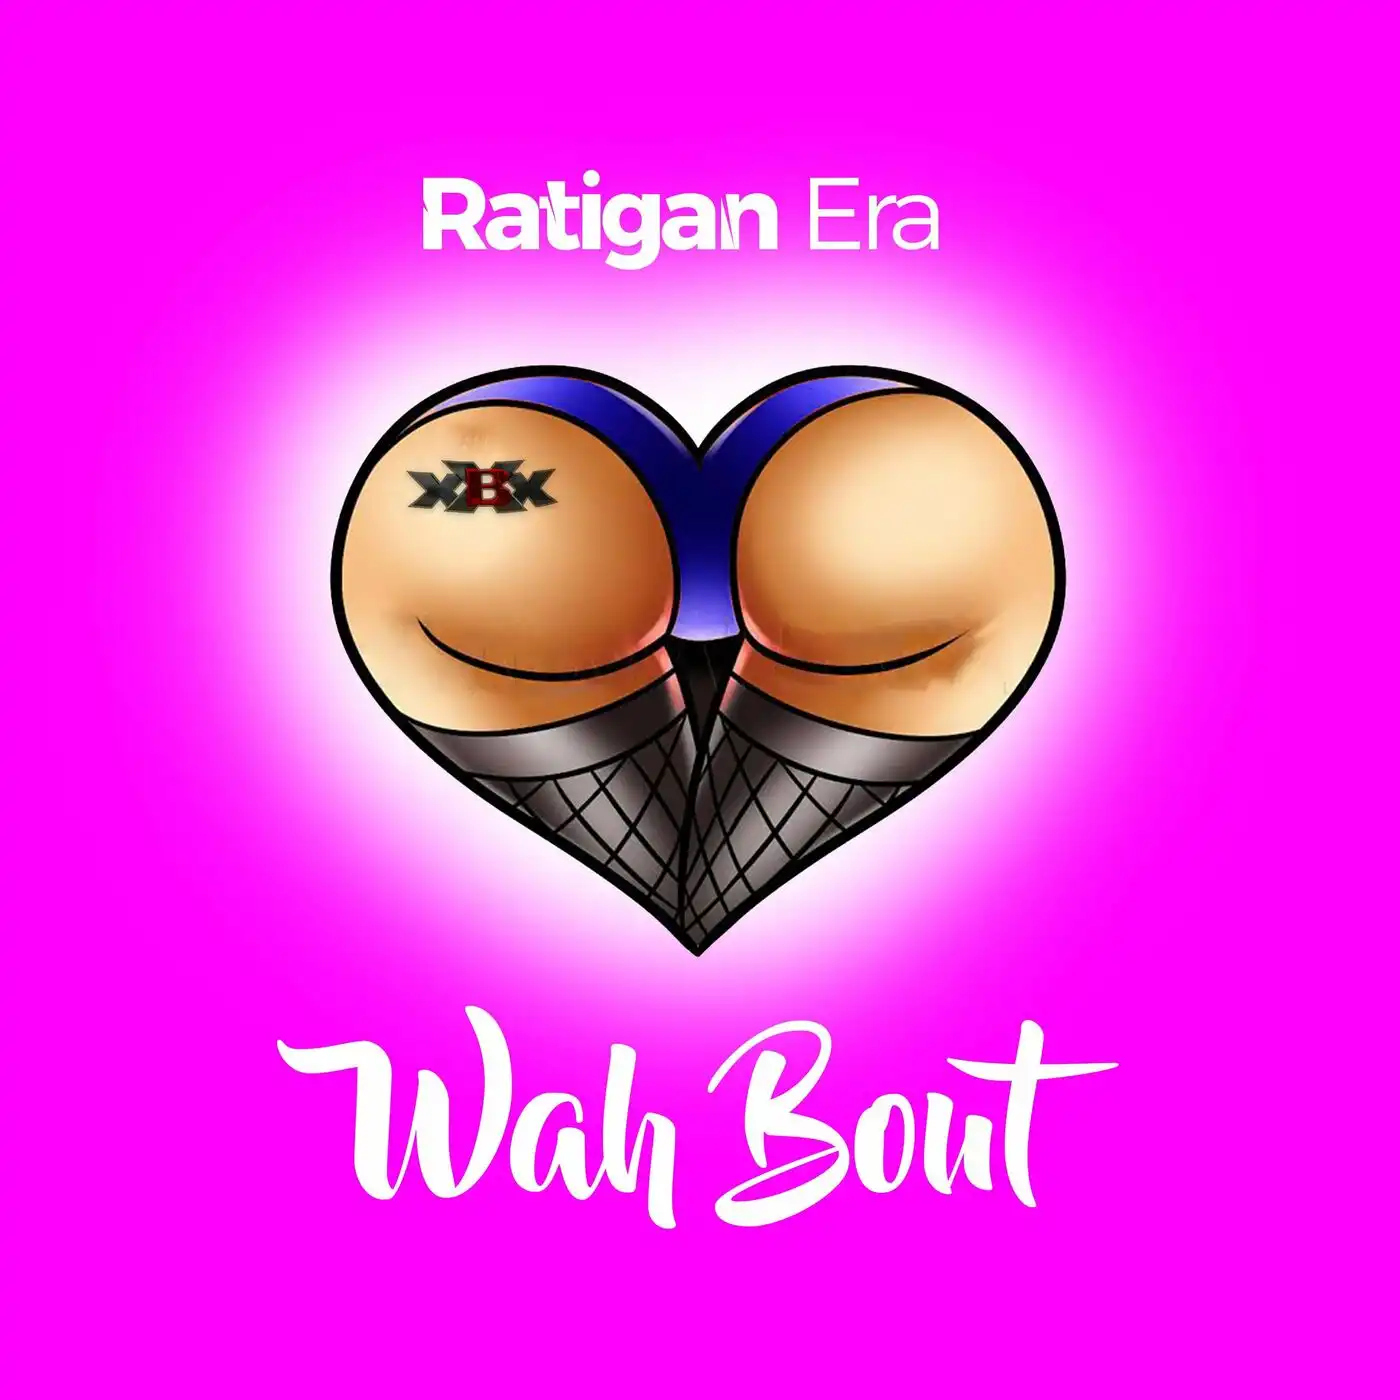 ratigan-era-wah-bout-album-cover